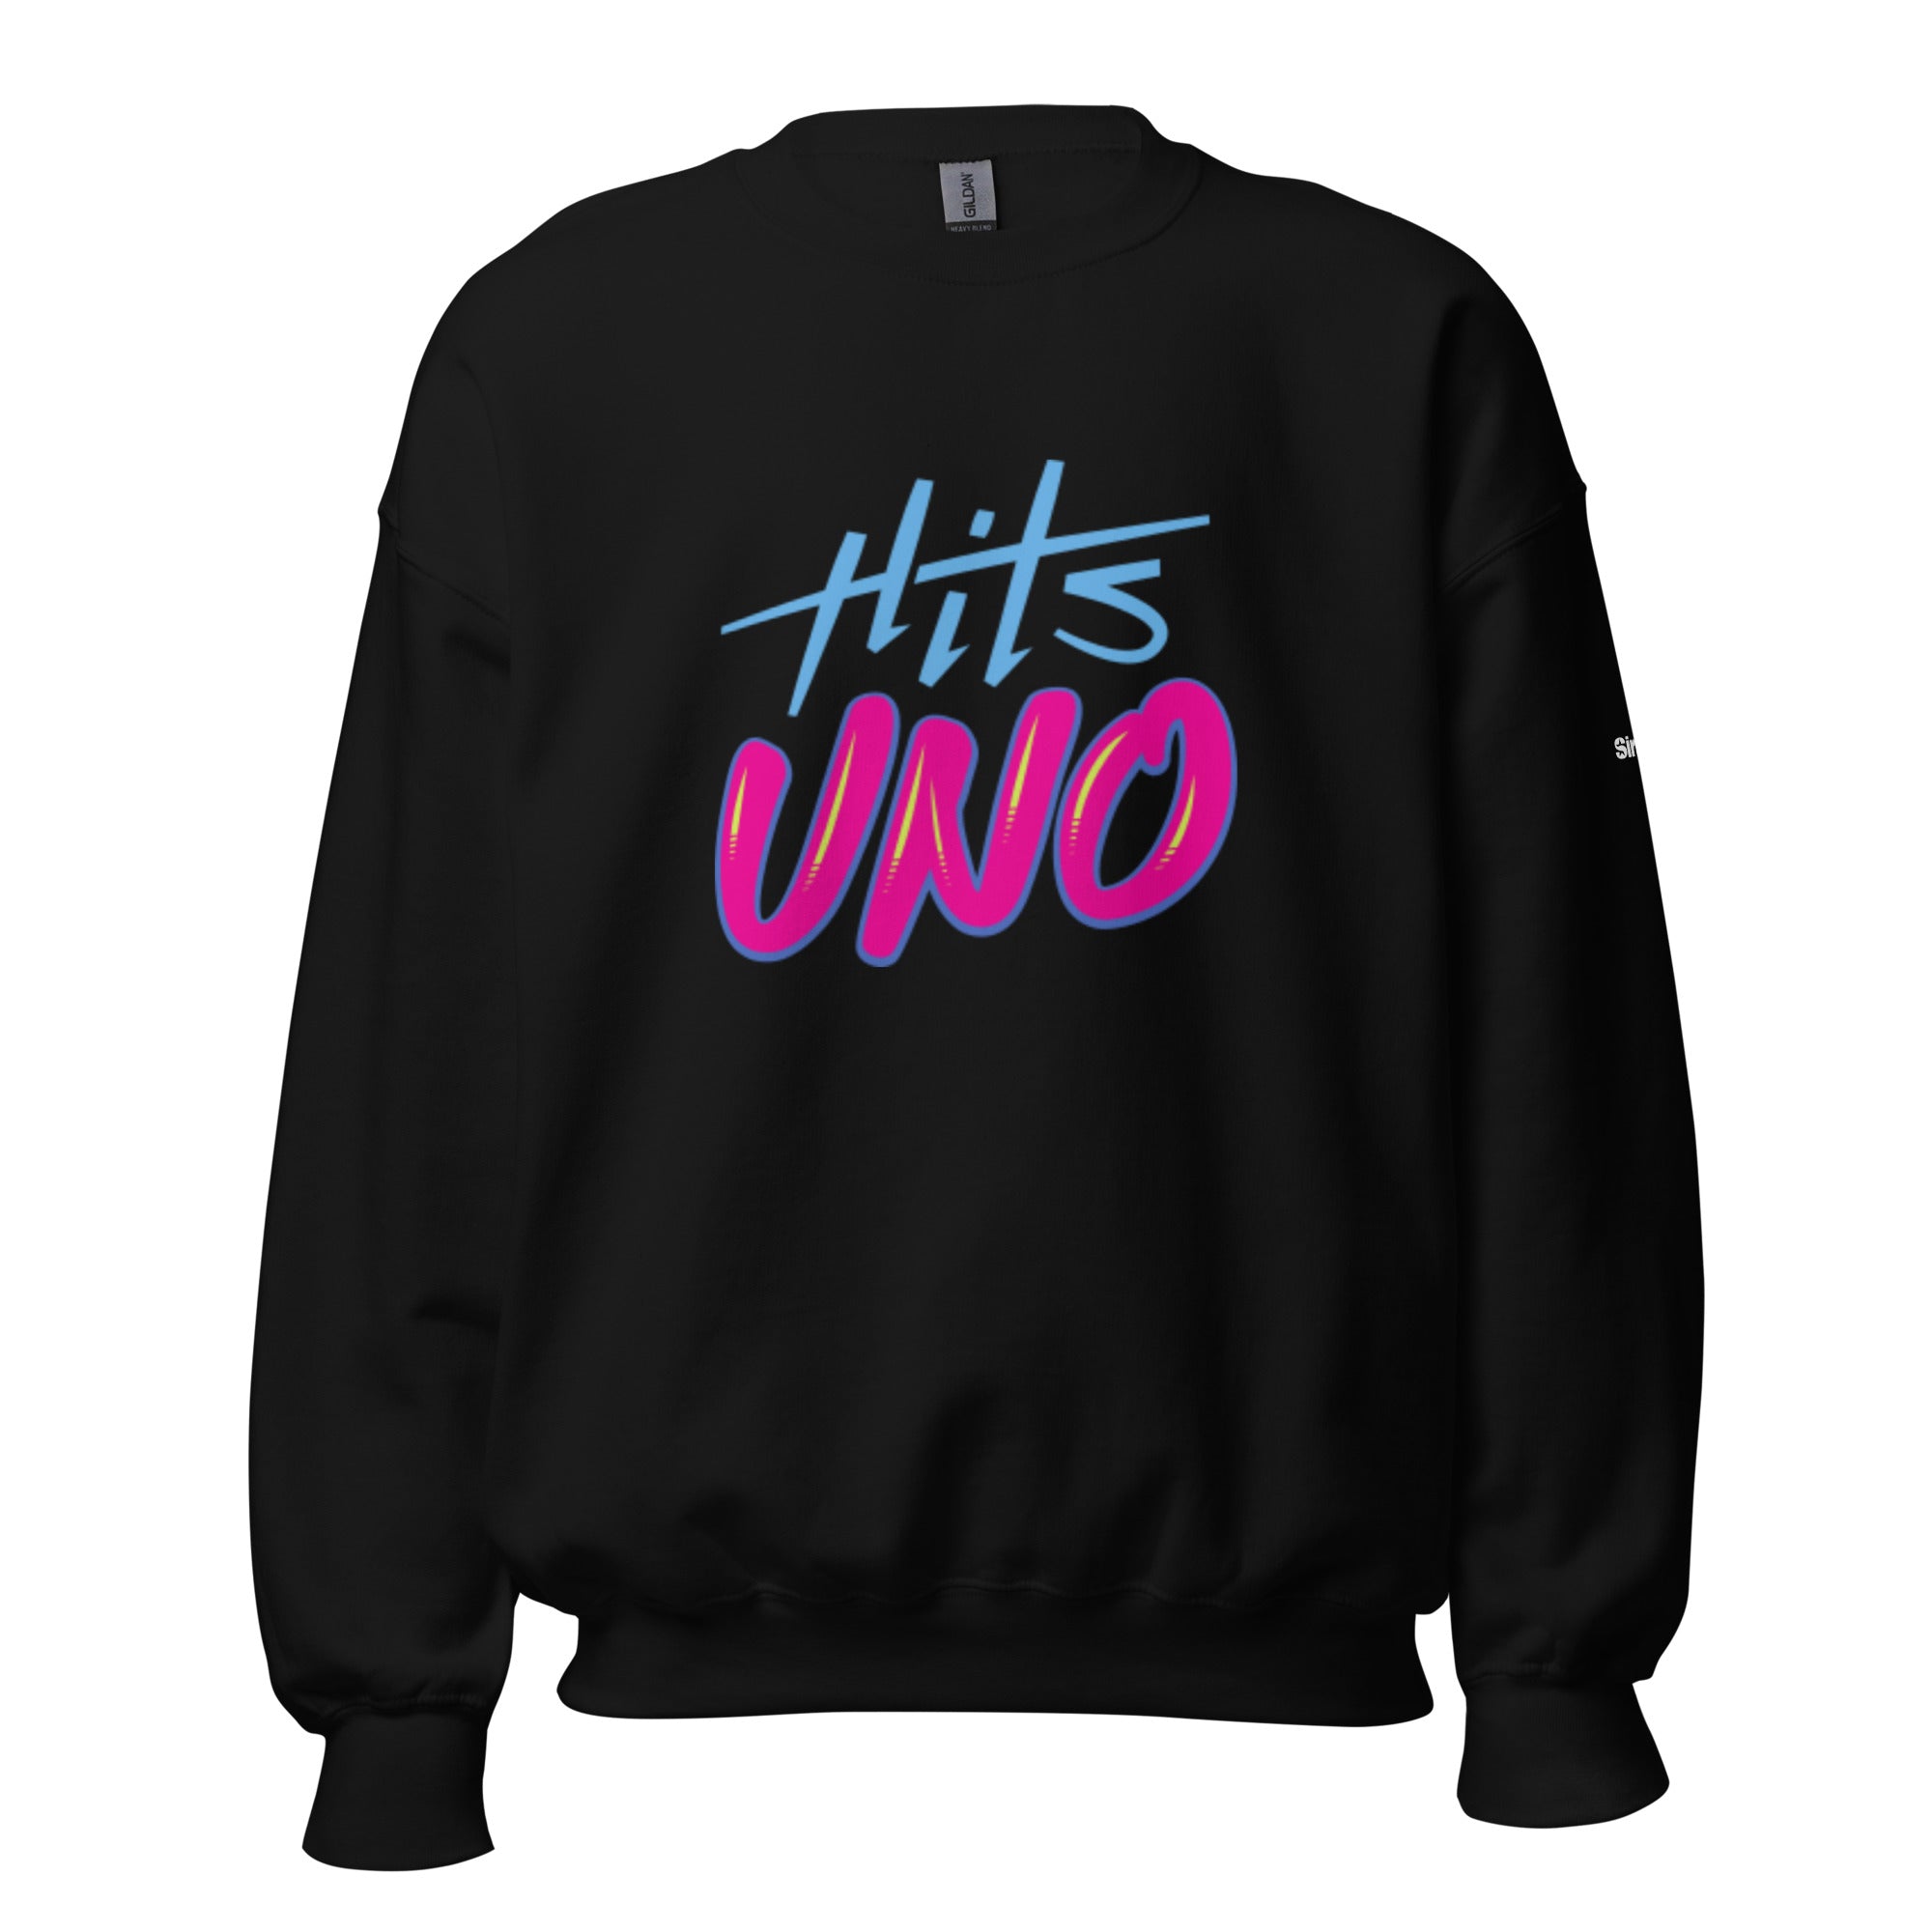 Hits Uno: Black Sweatshirt